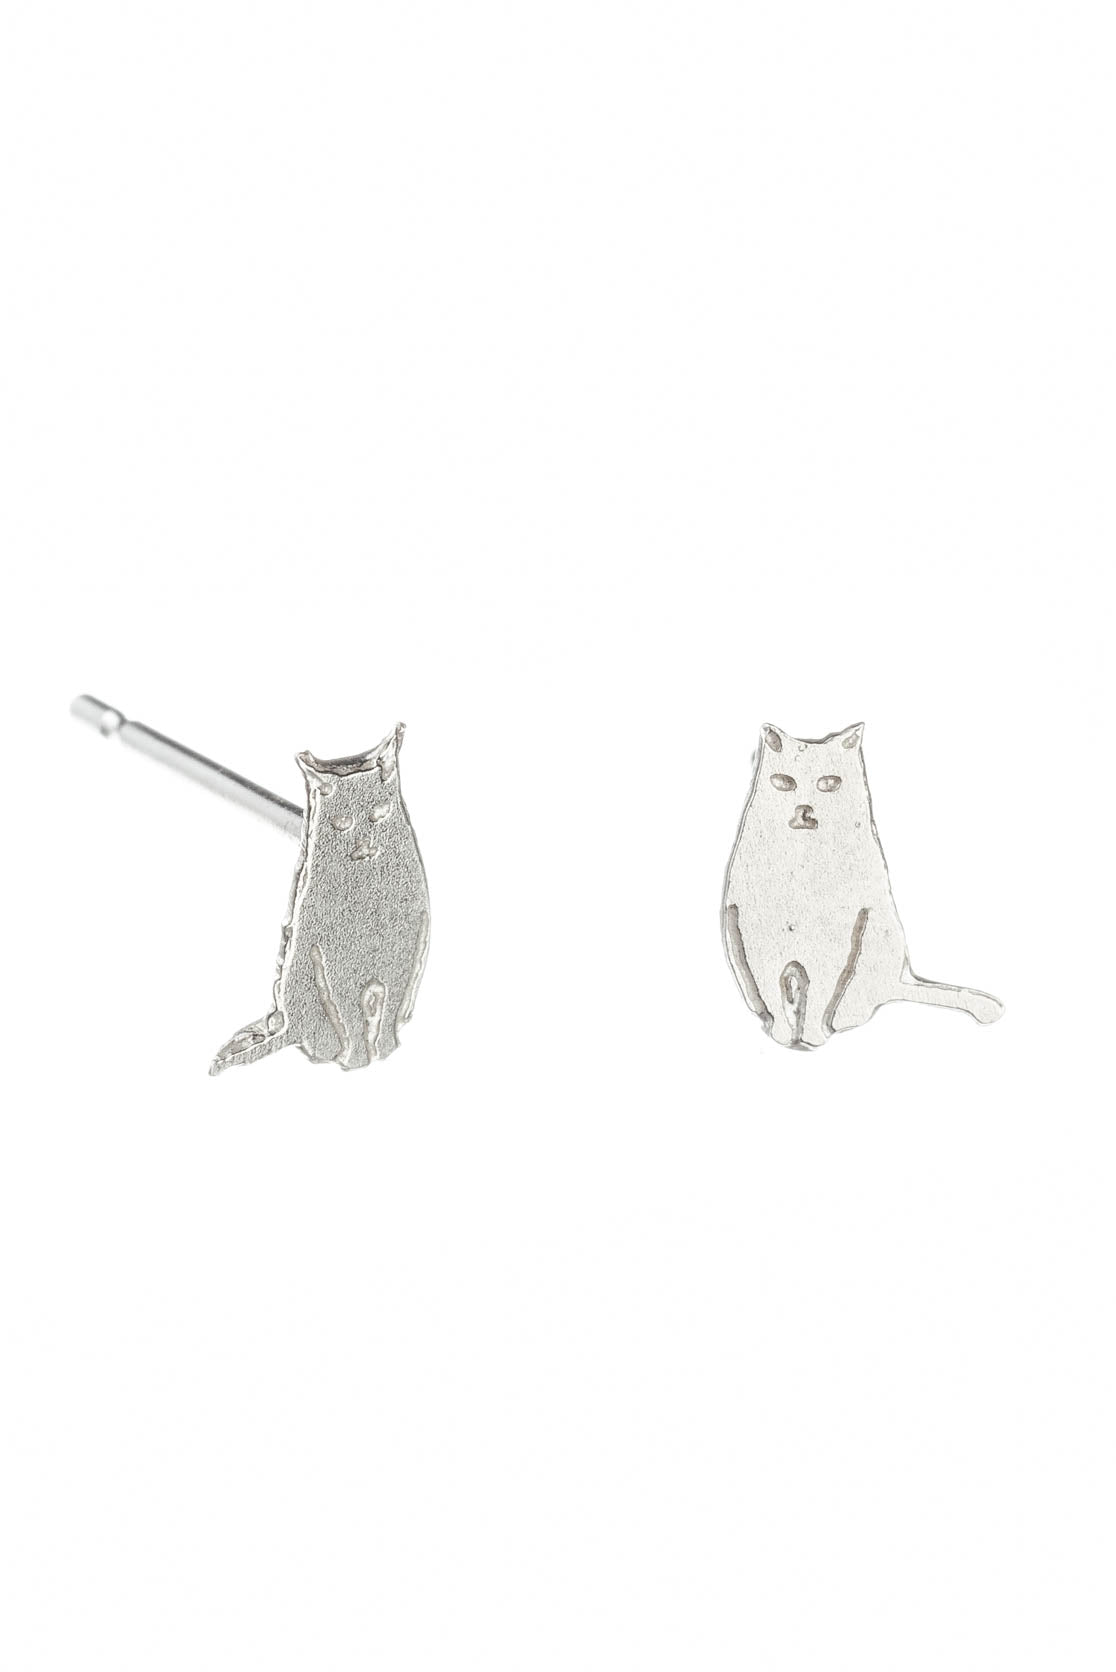 Tiny Sitting Cat Stud Earrings